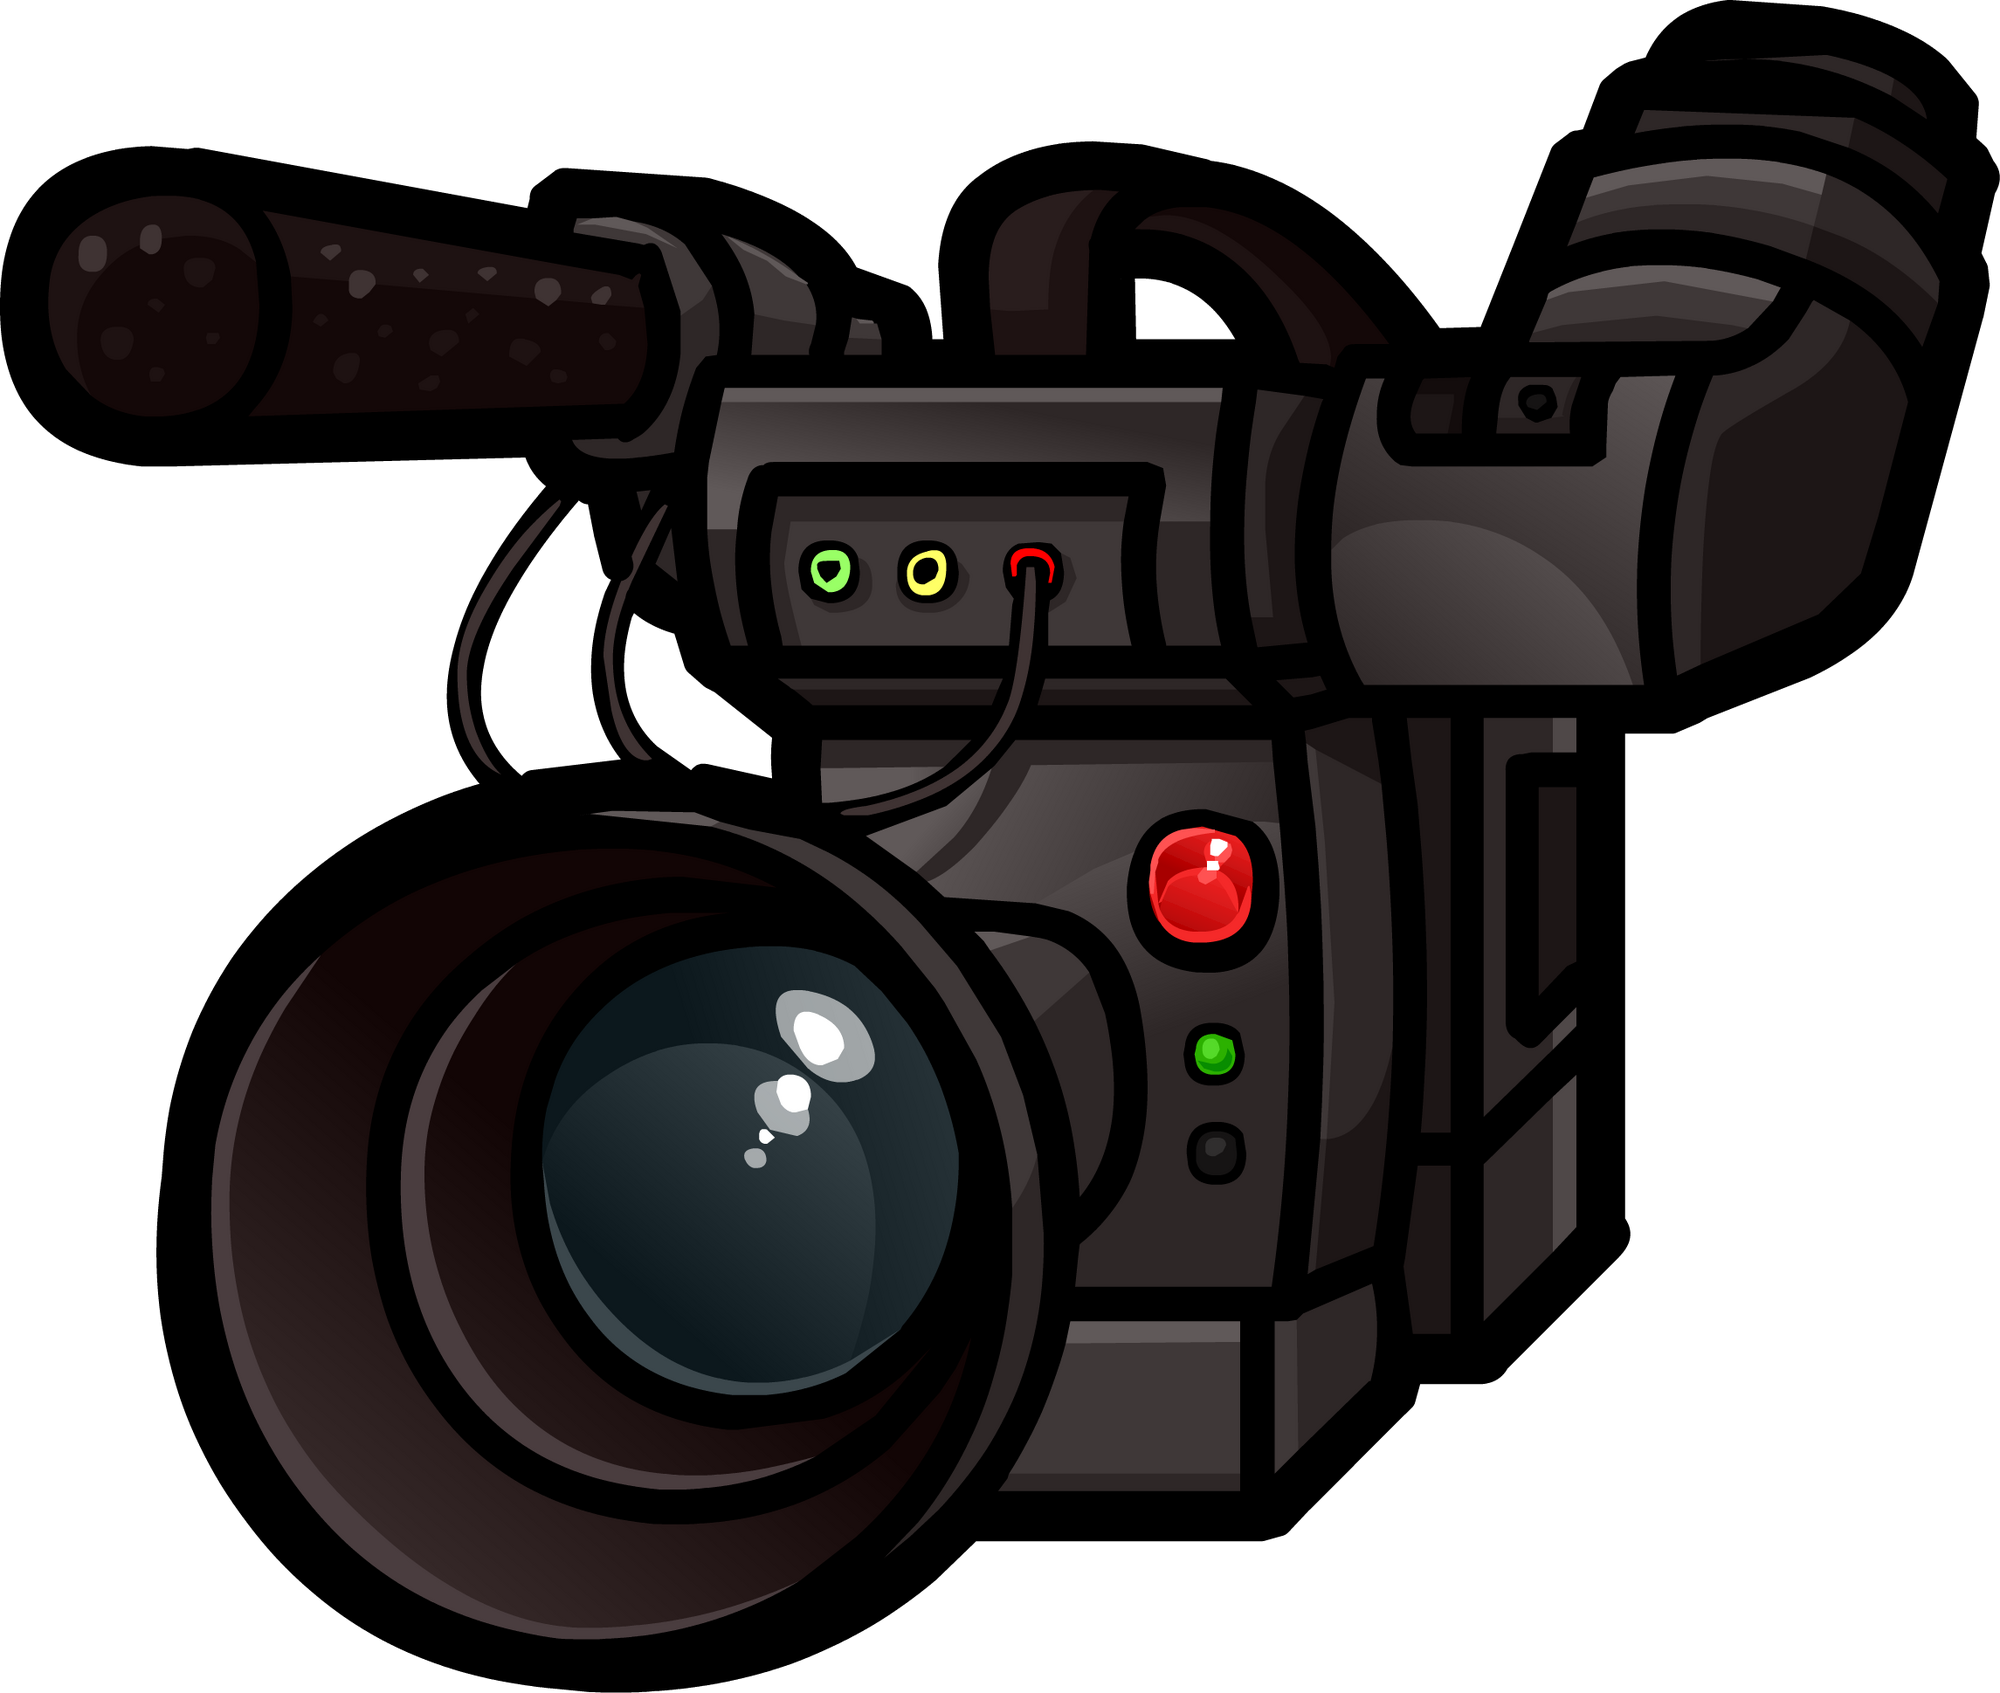 Video Camera | Club Penguin Wiki | FANDOM powered by Wikia